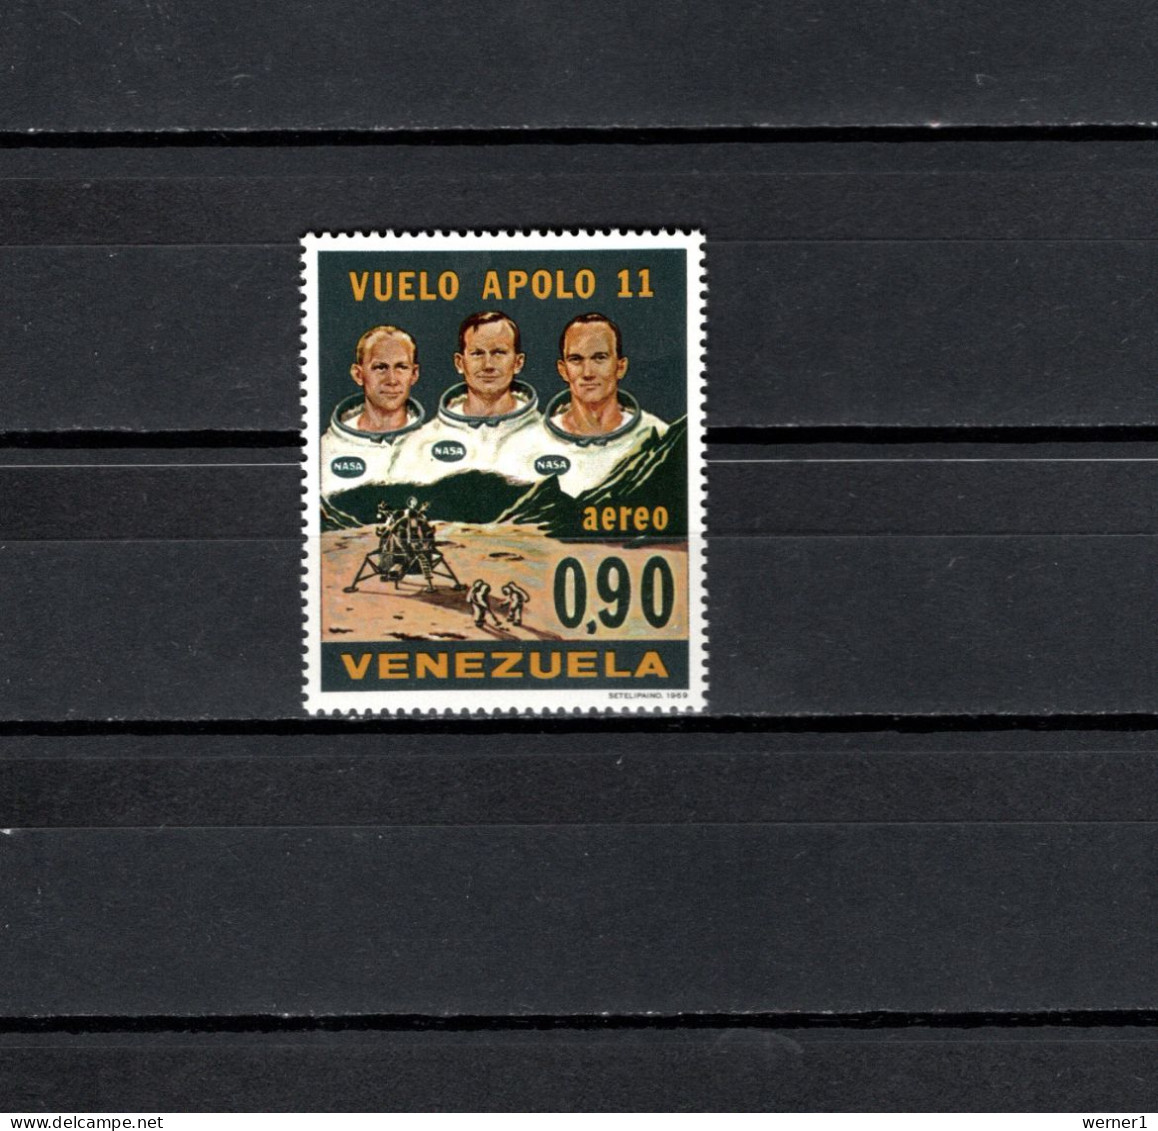 Venezuela 1969 Space, Apollo 11 Moonlanding Stamp MNH - Südamerika